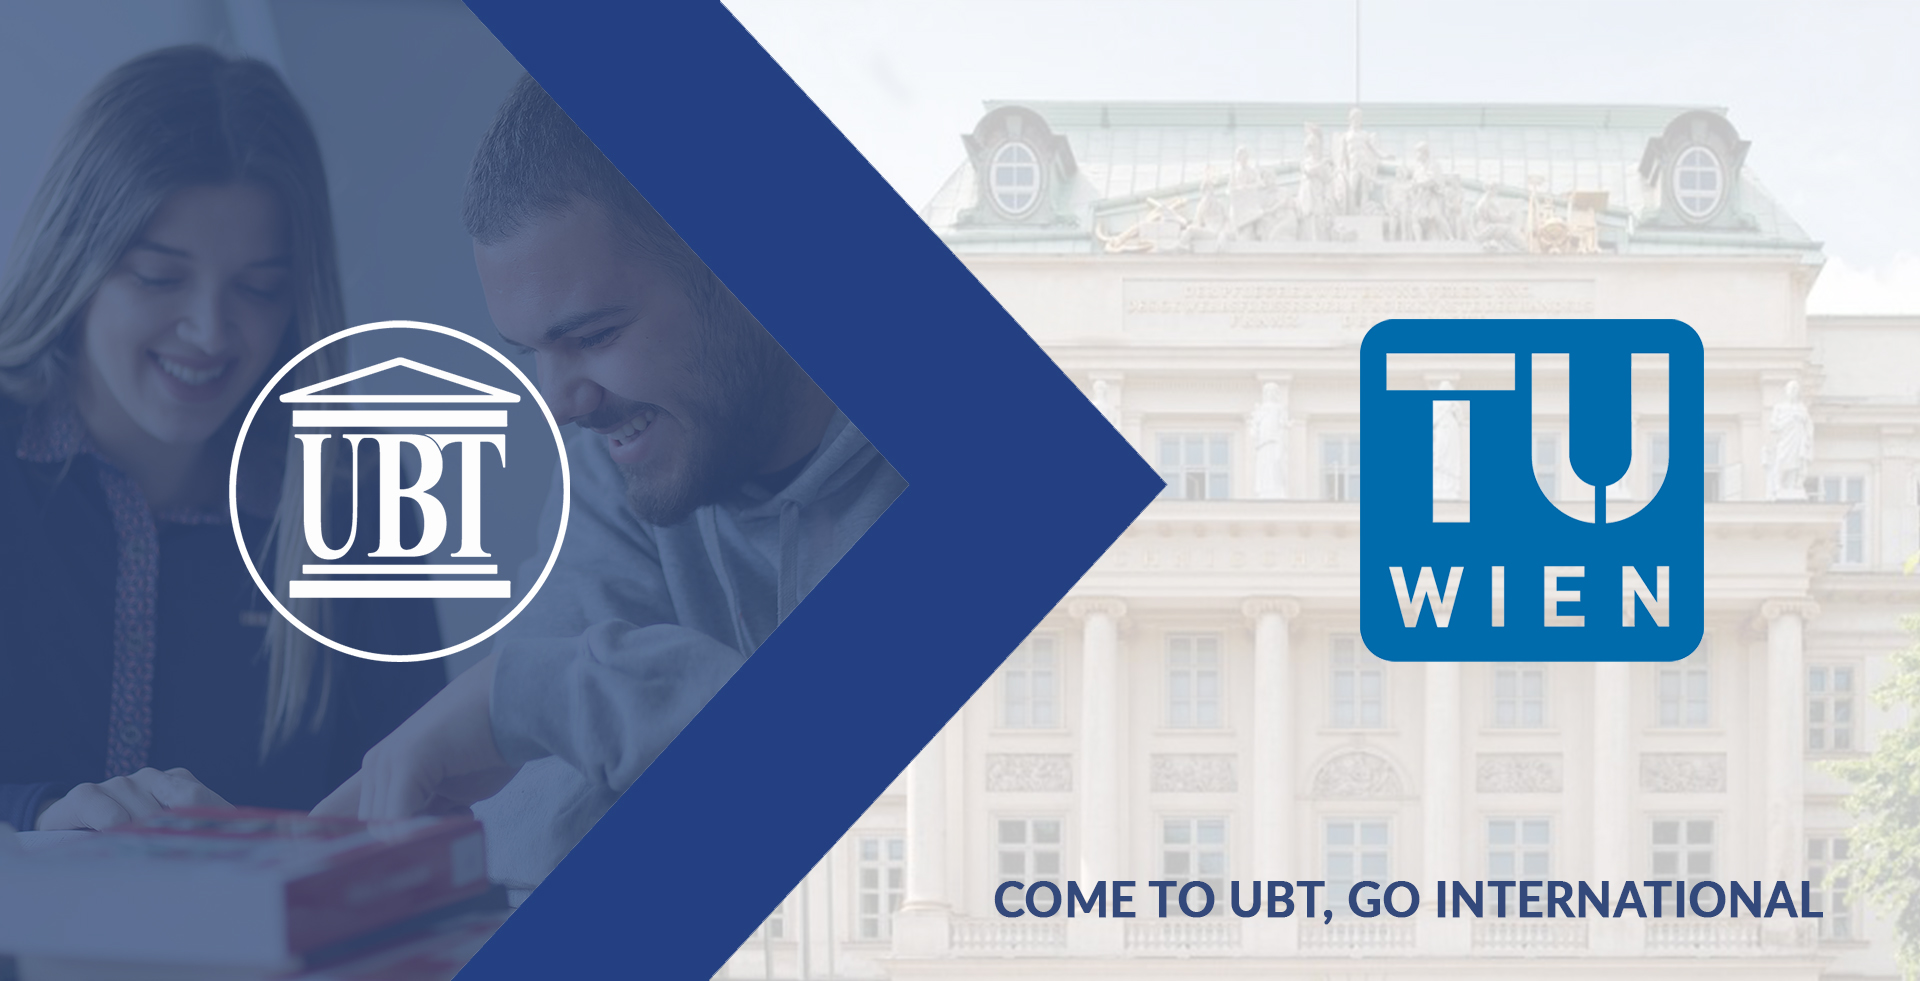 UBT ofron studime të përbashkëta me Vienna University of Technology, në Austri